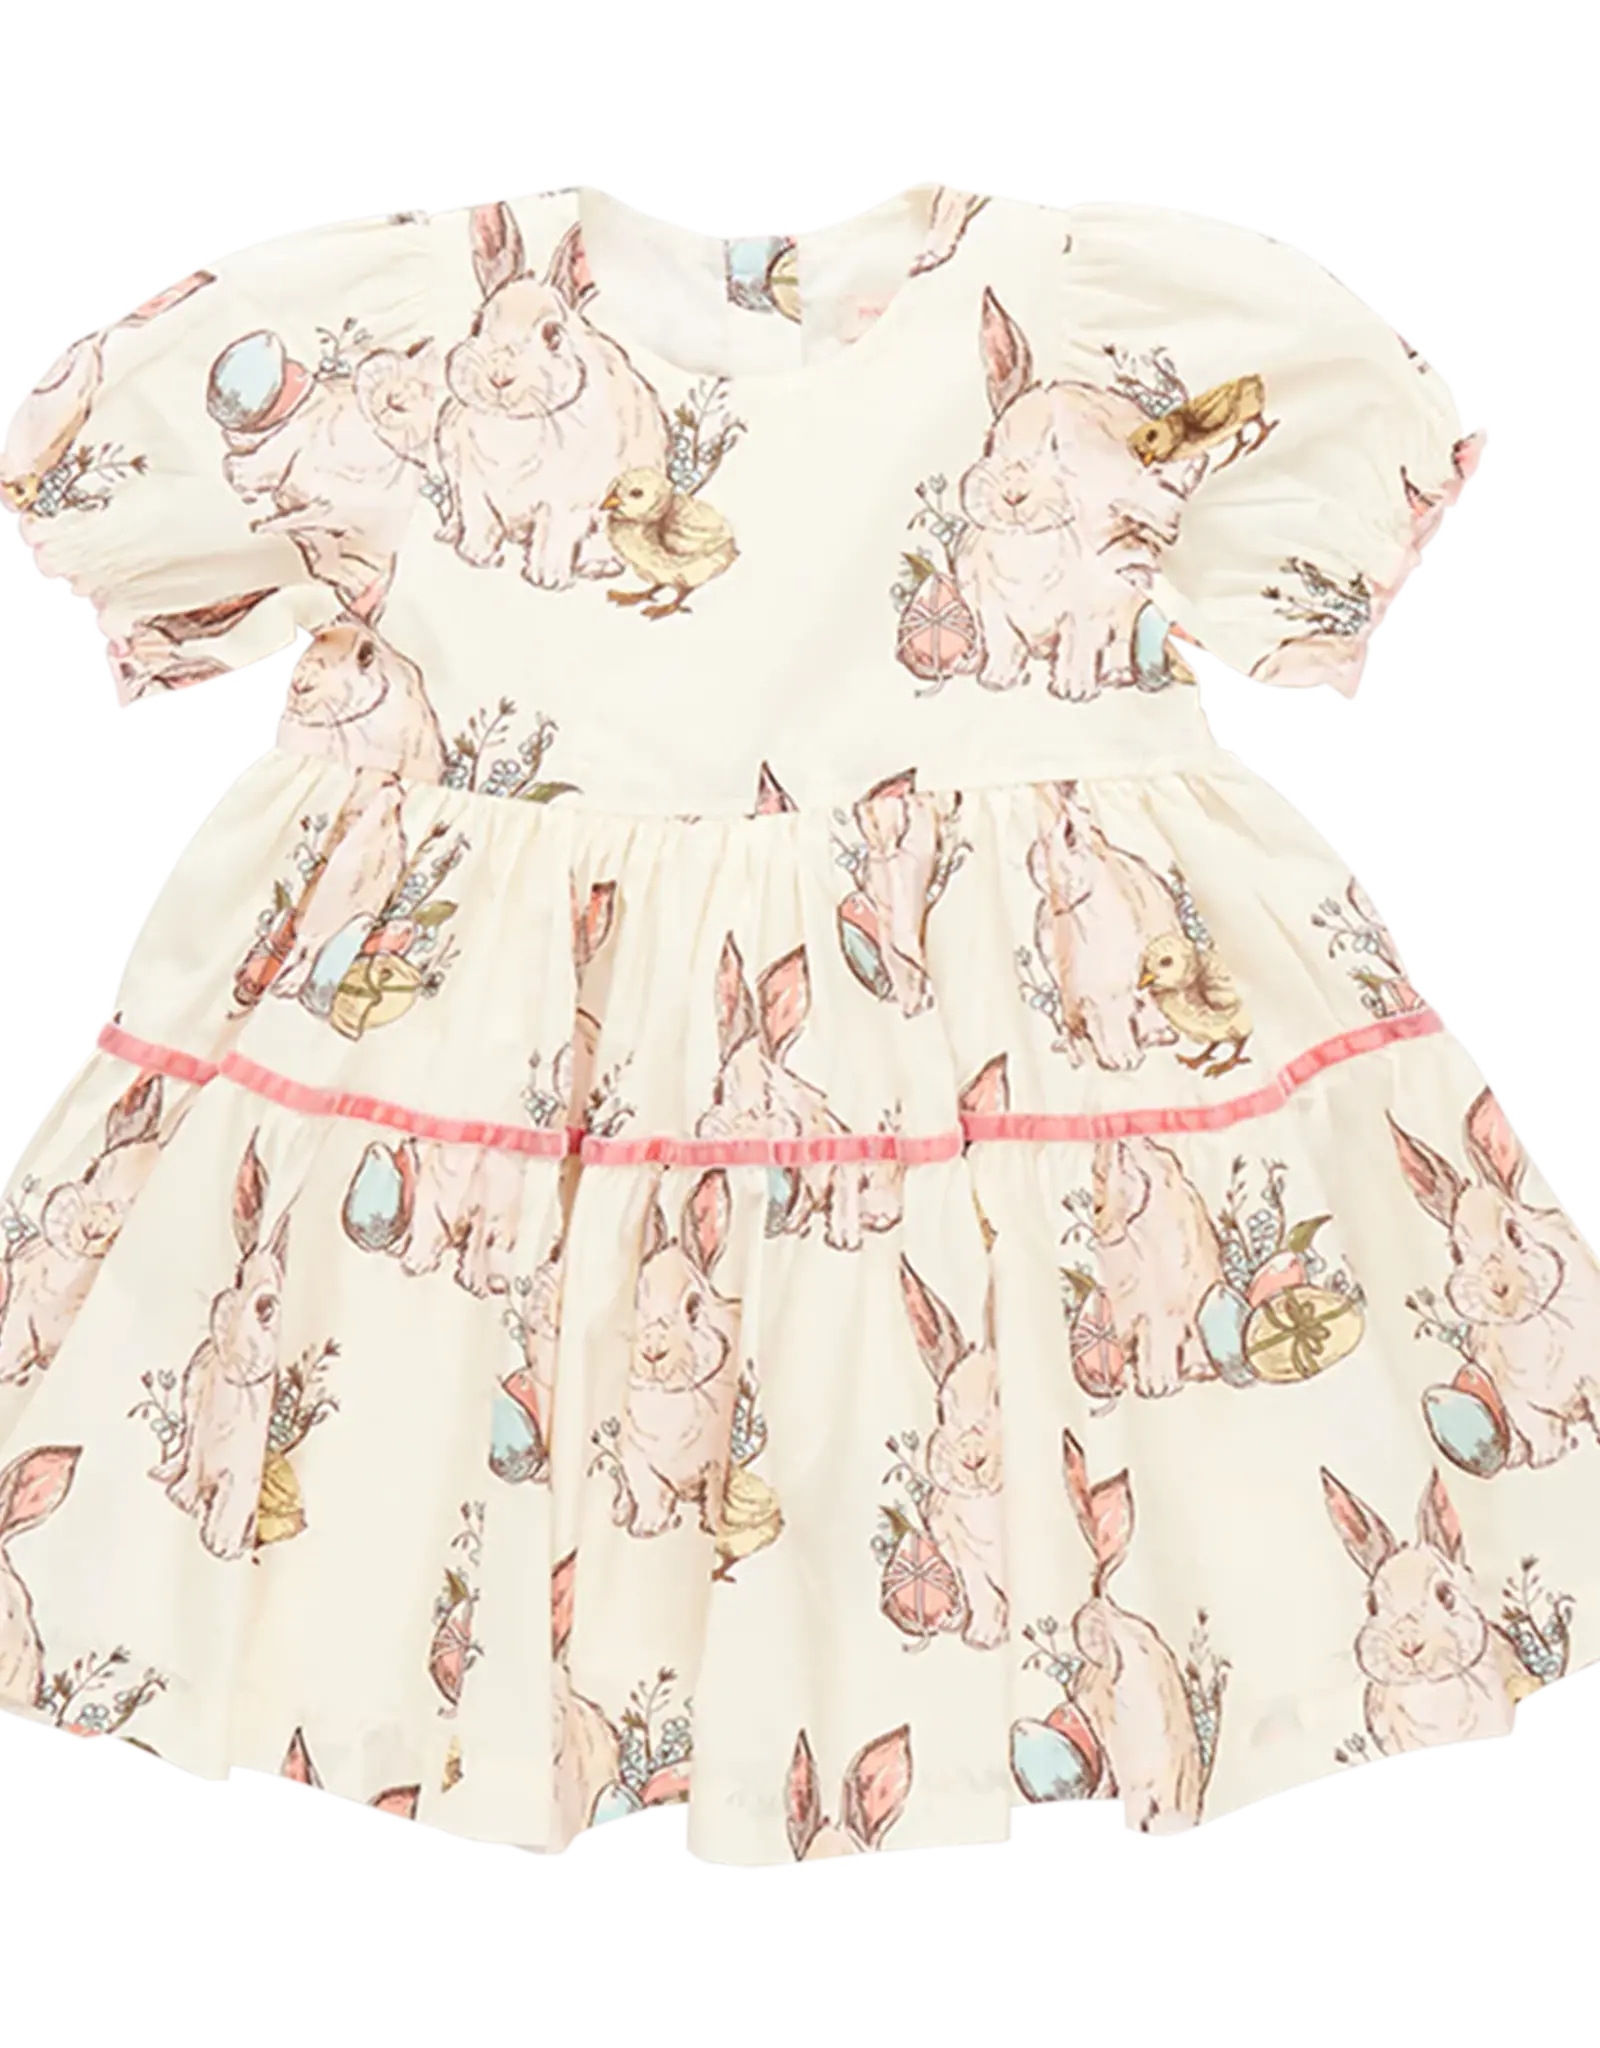 Pink Chicken girls maribelle dress - bunny friends